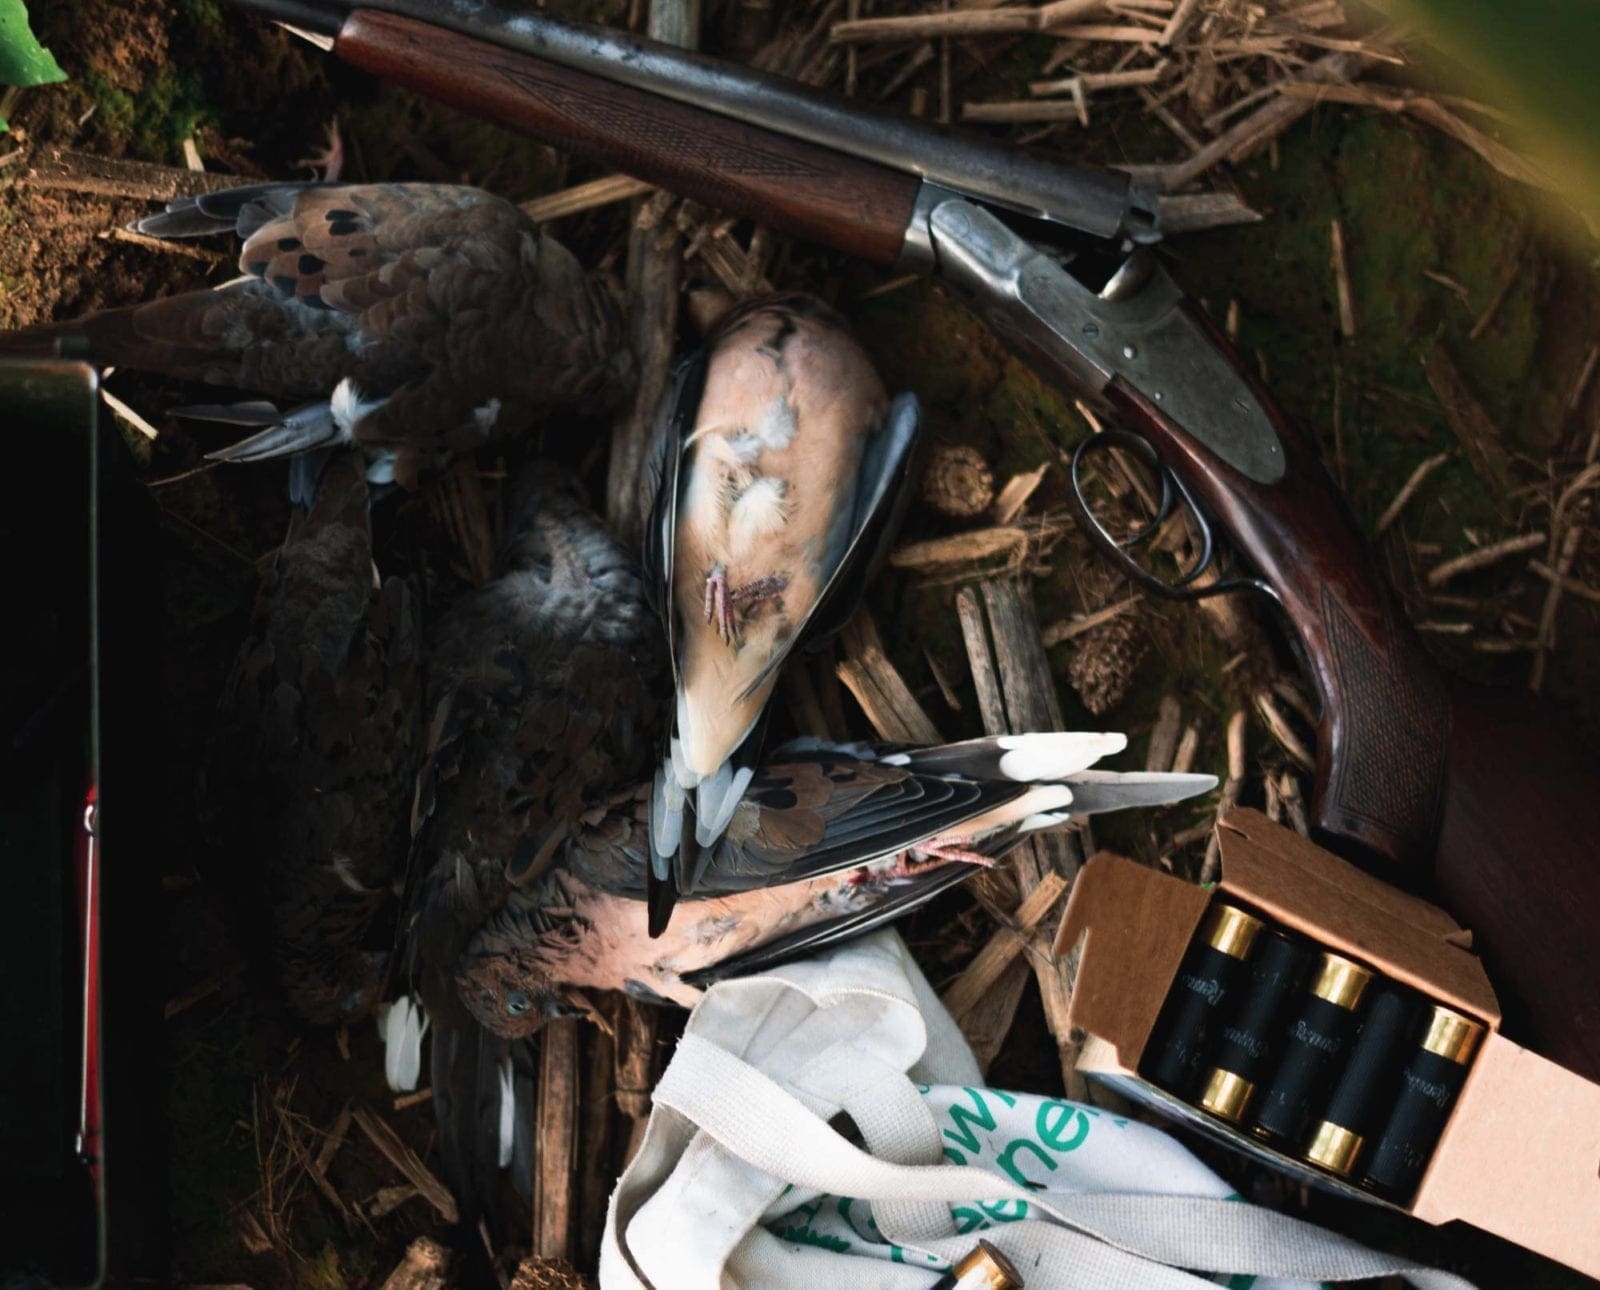 A shotgun and shotgun shells on a dove hunt.